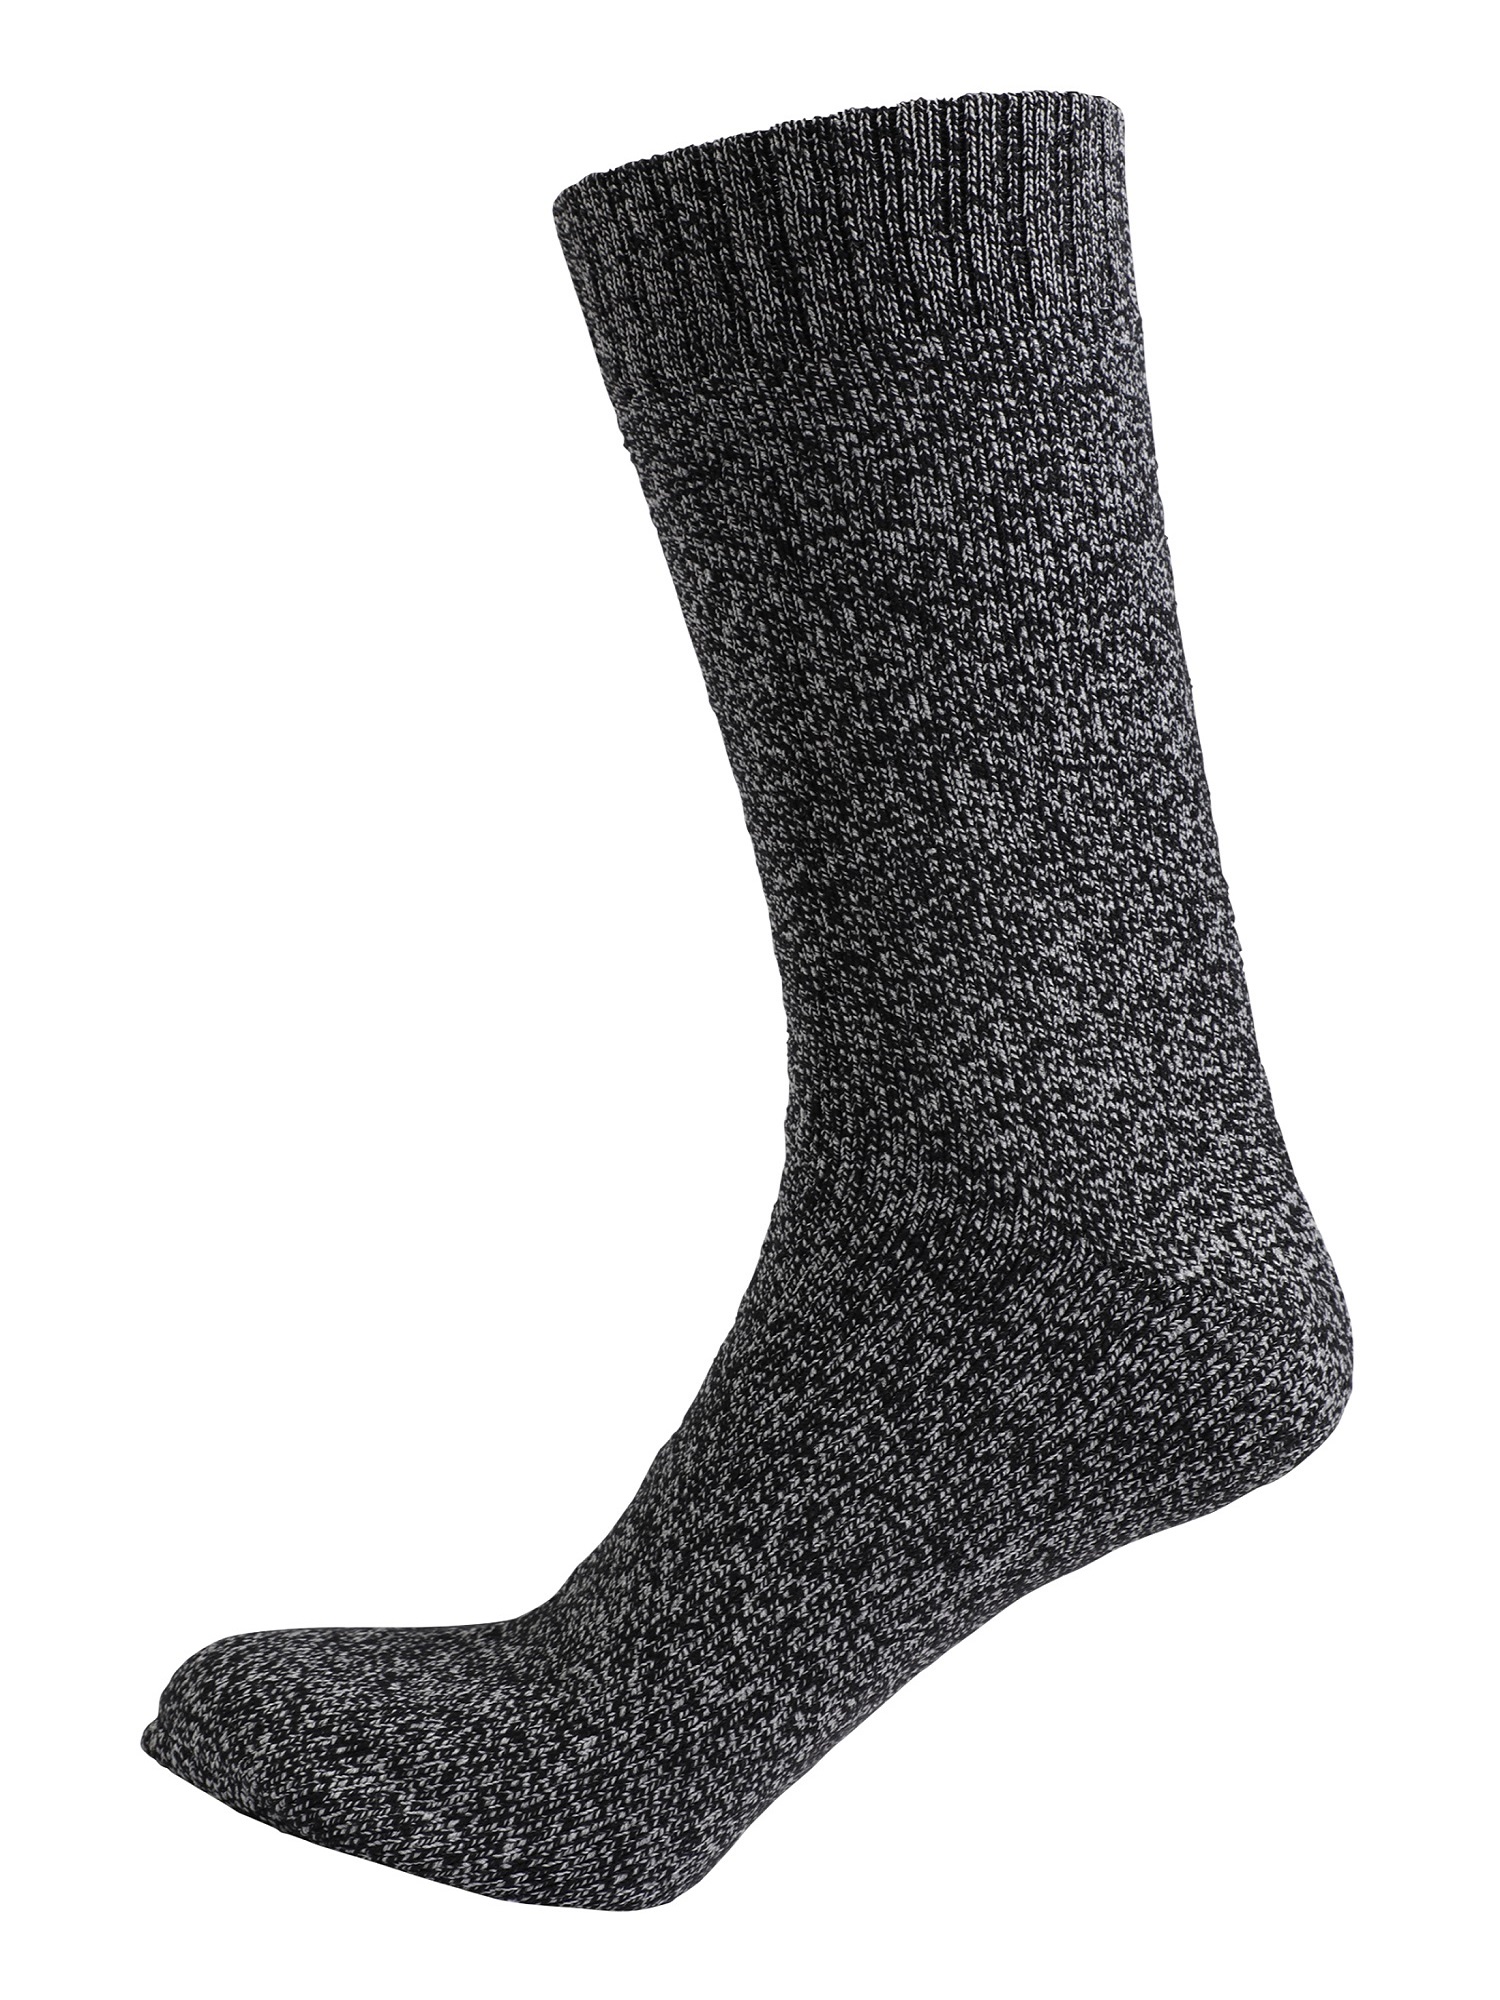 Weatherwear Heavyweight Boot Socks, 6-pack - image 1 of 1